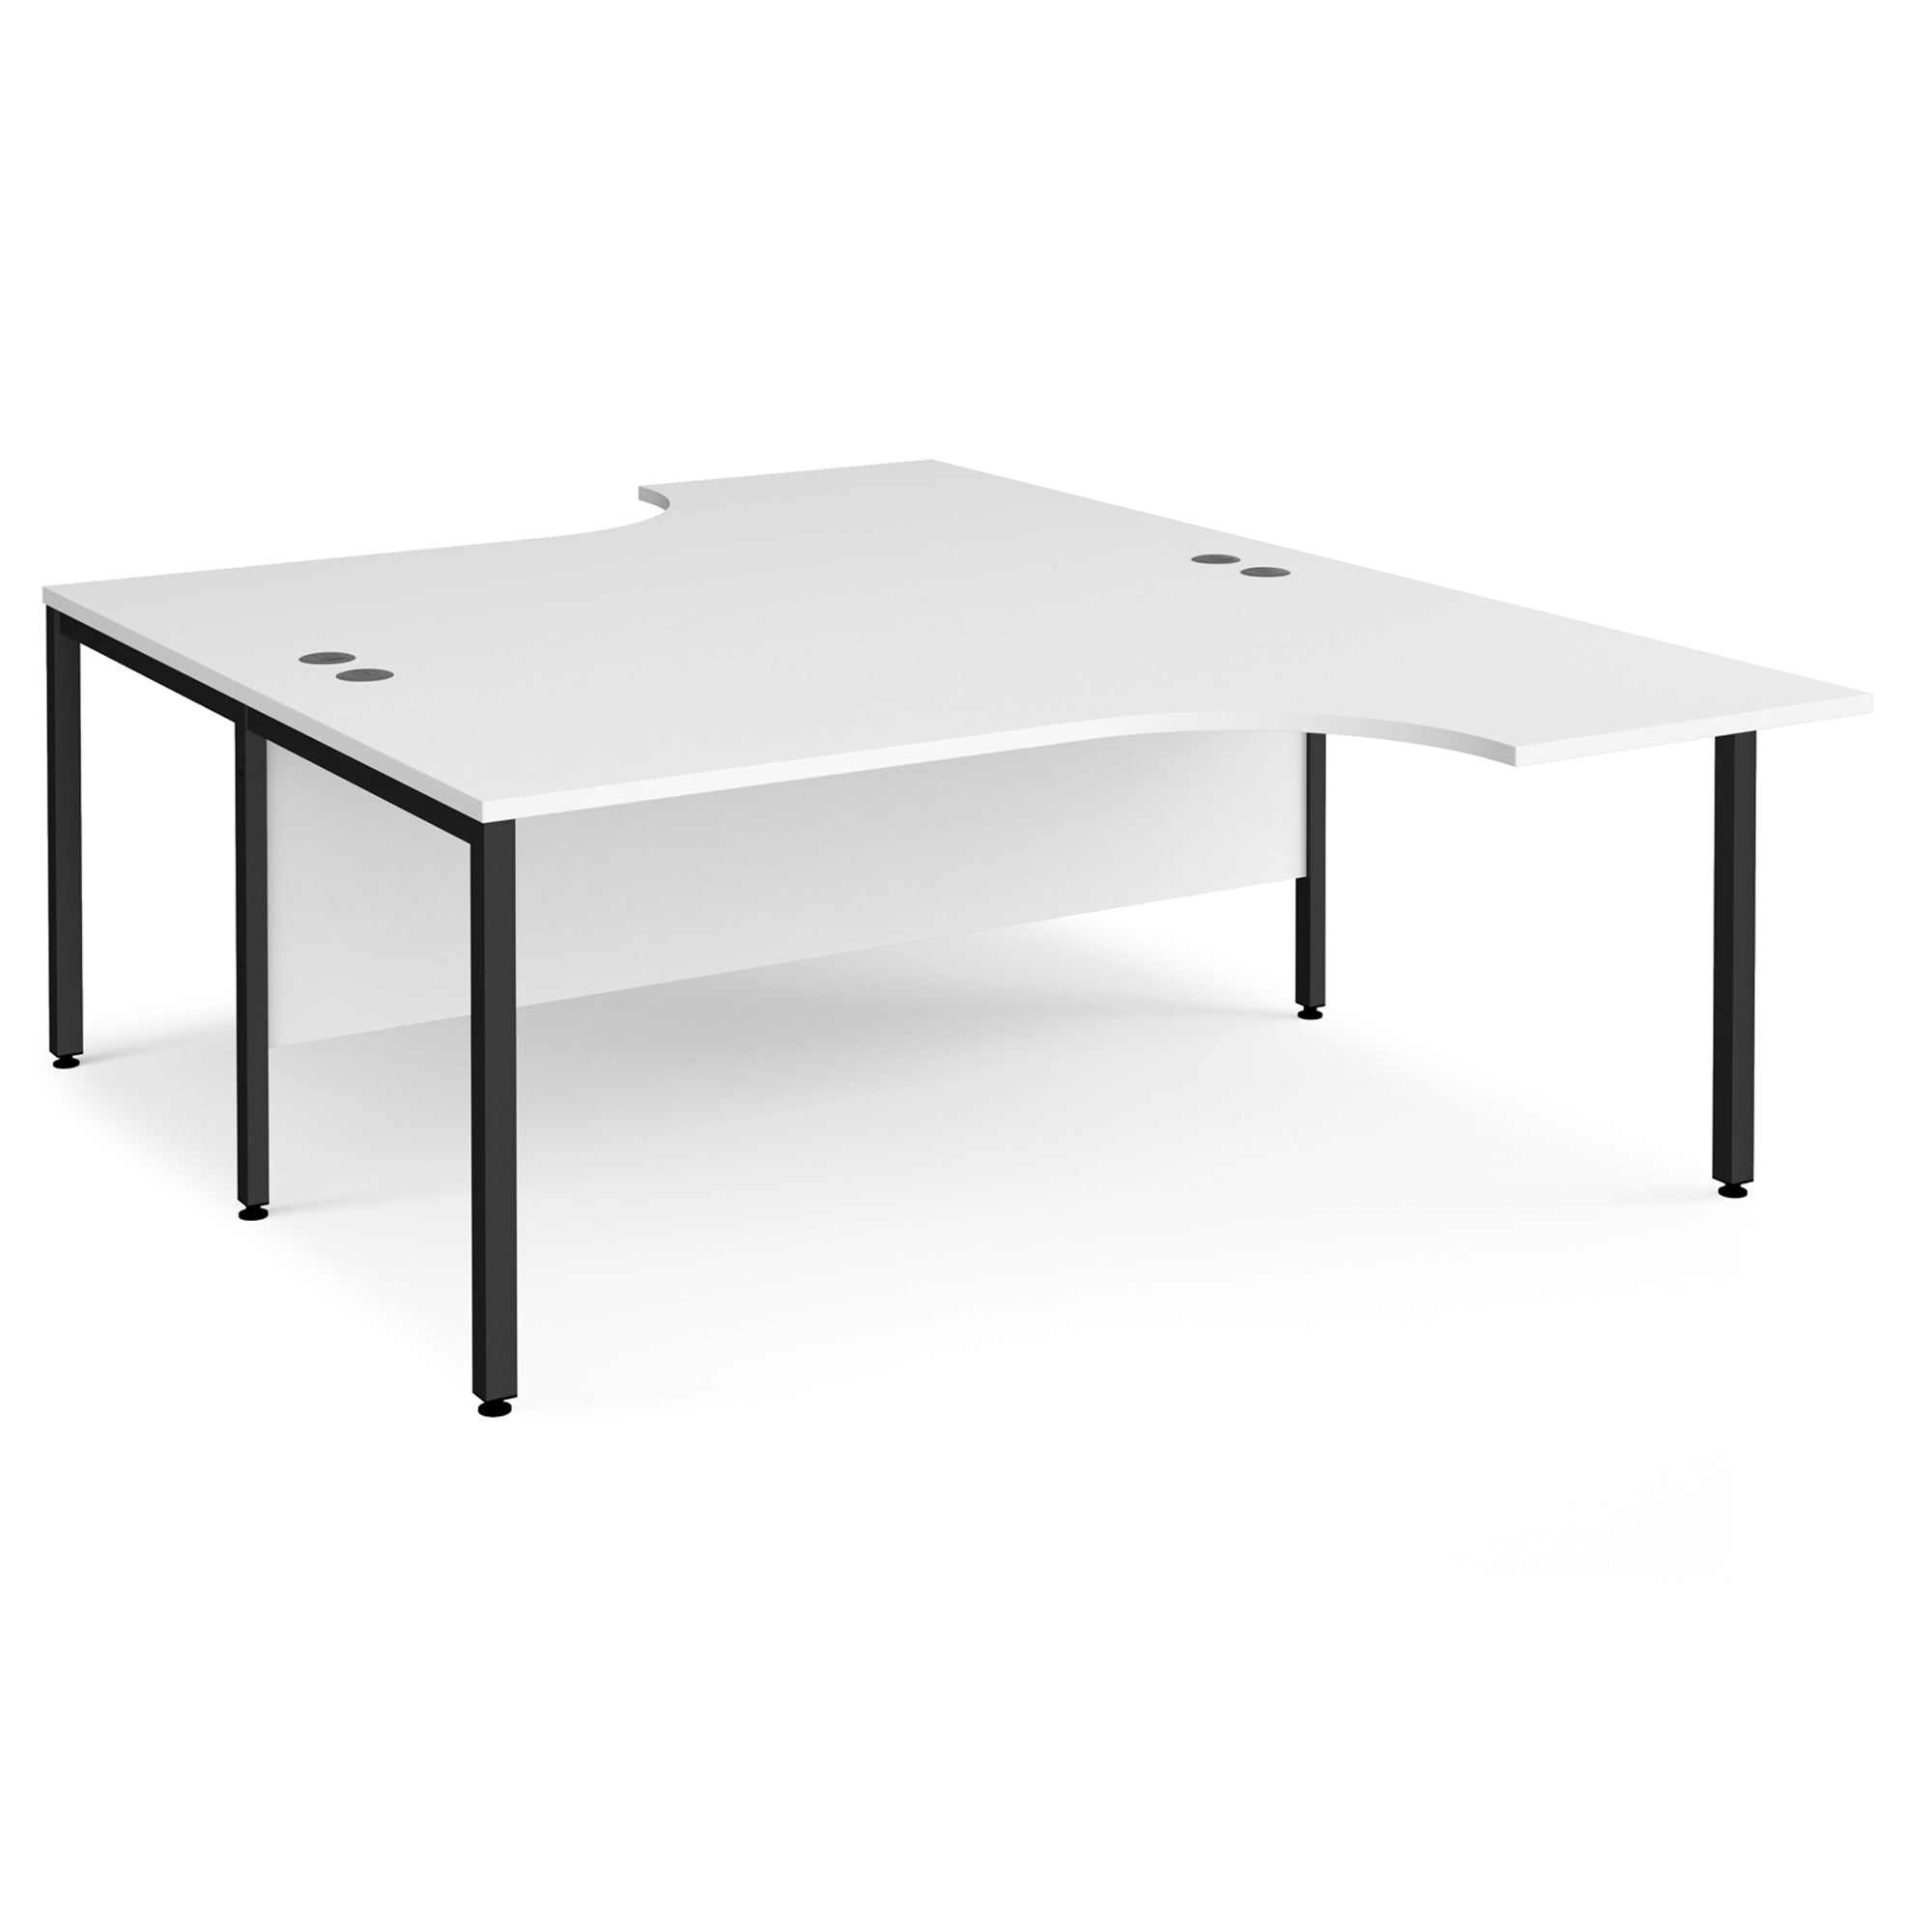 Maestro 25 bench leg to back ergonomic desks - Office Products Online